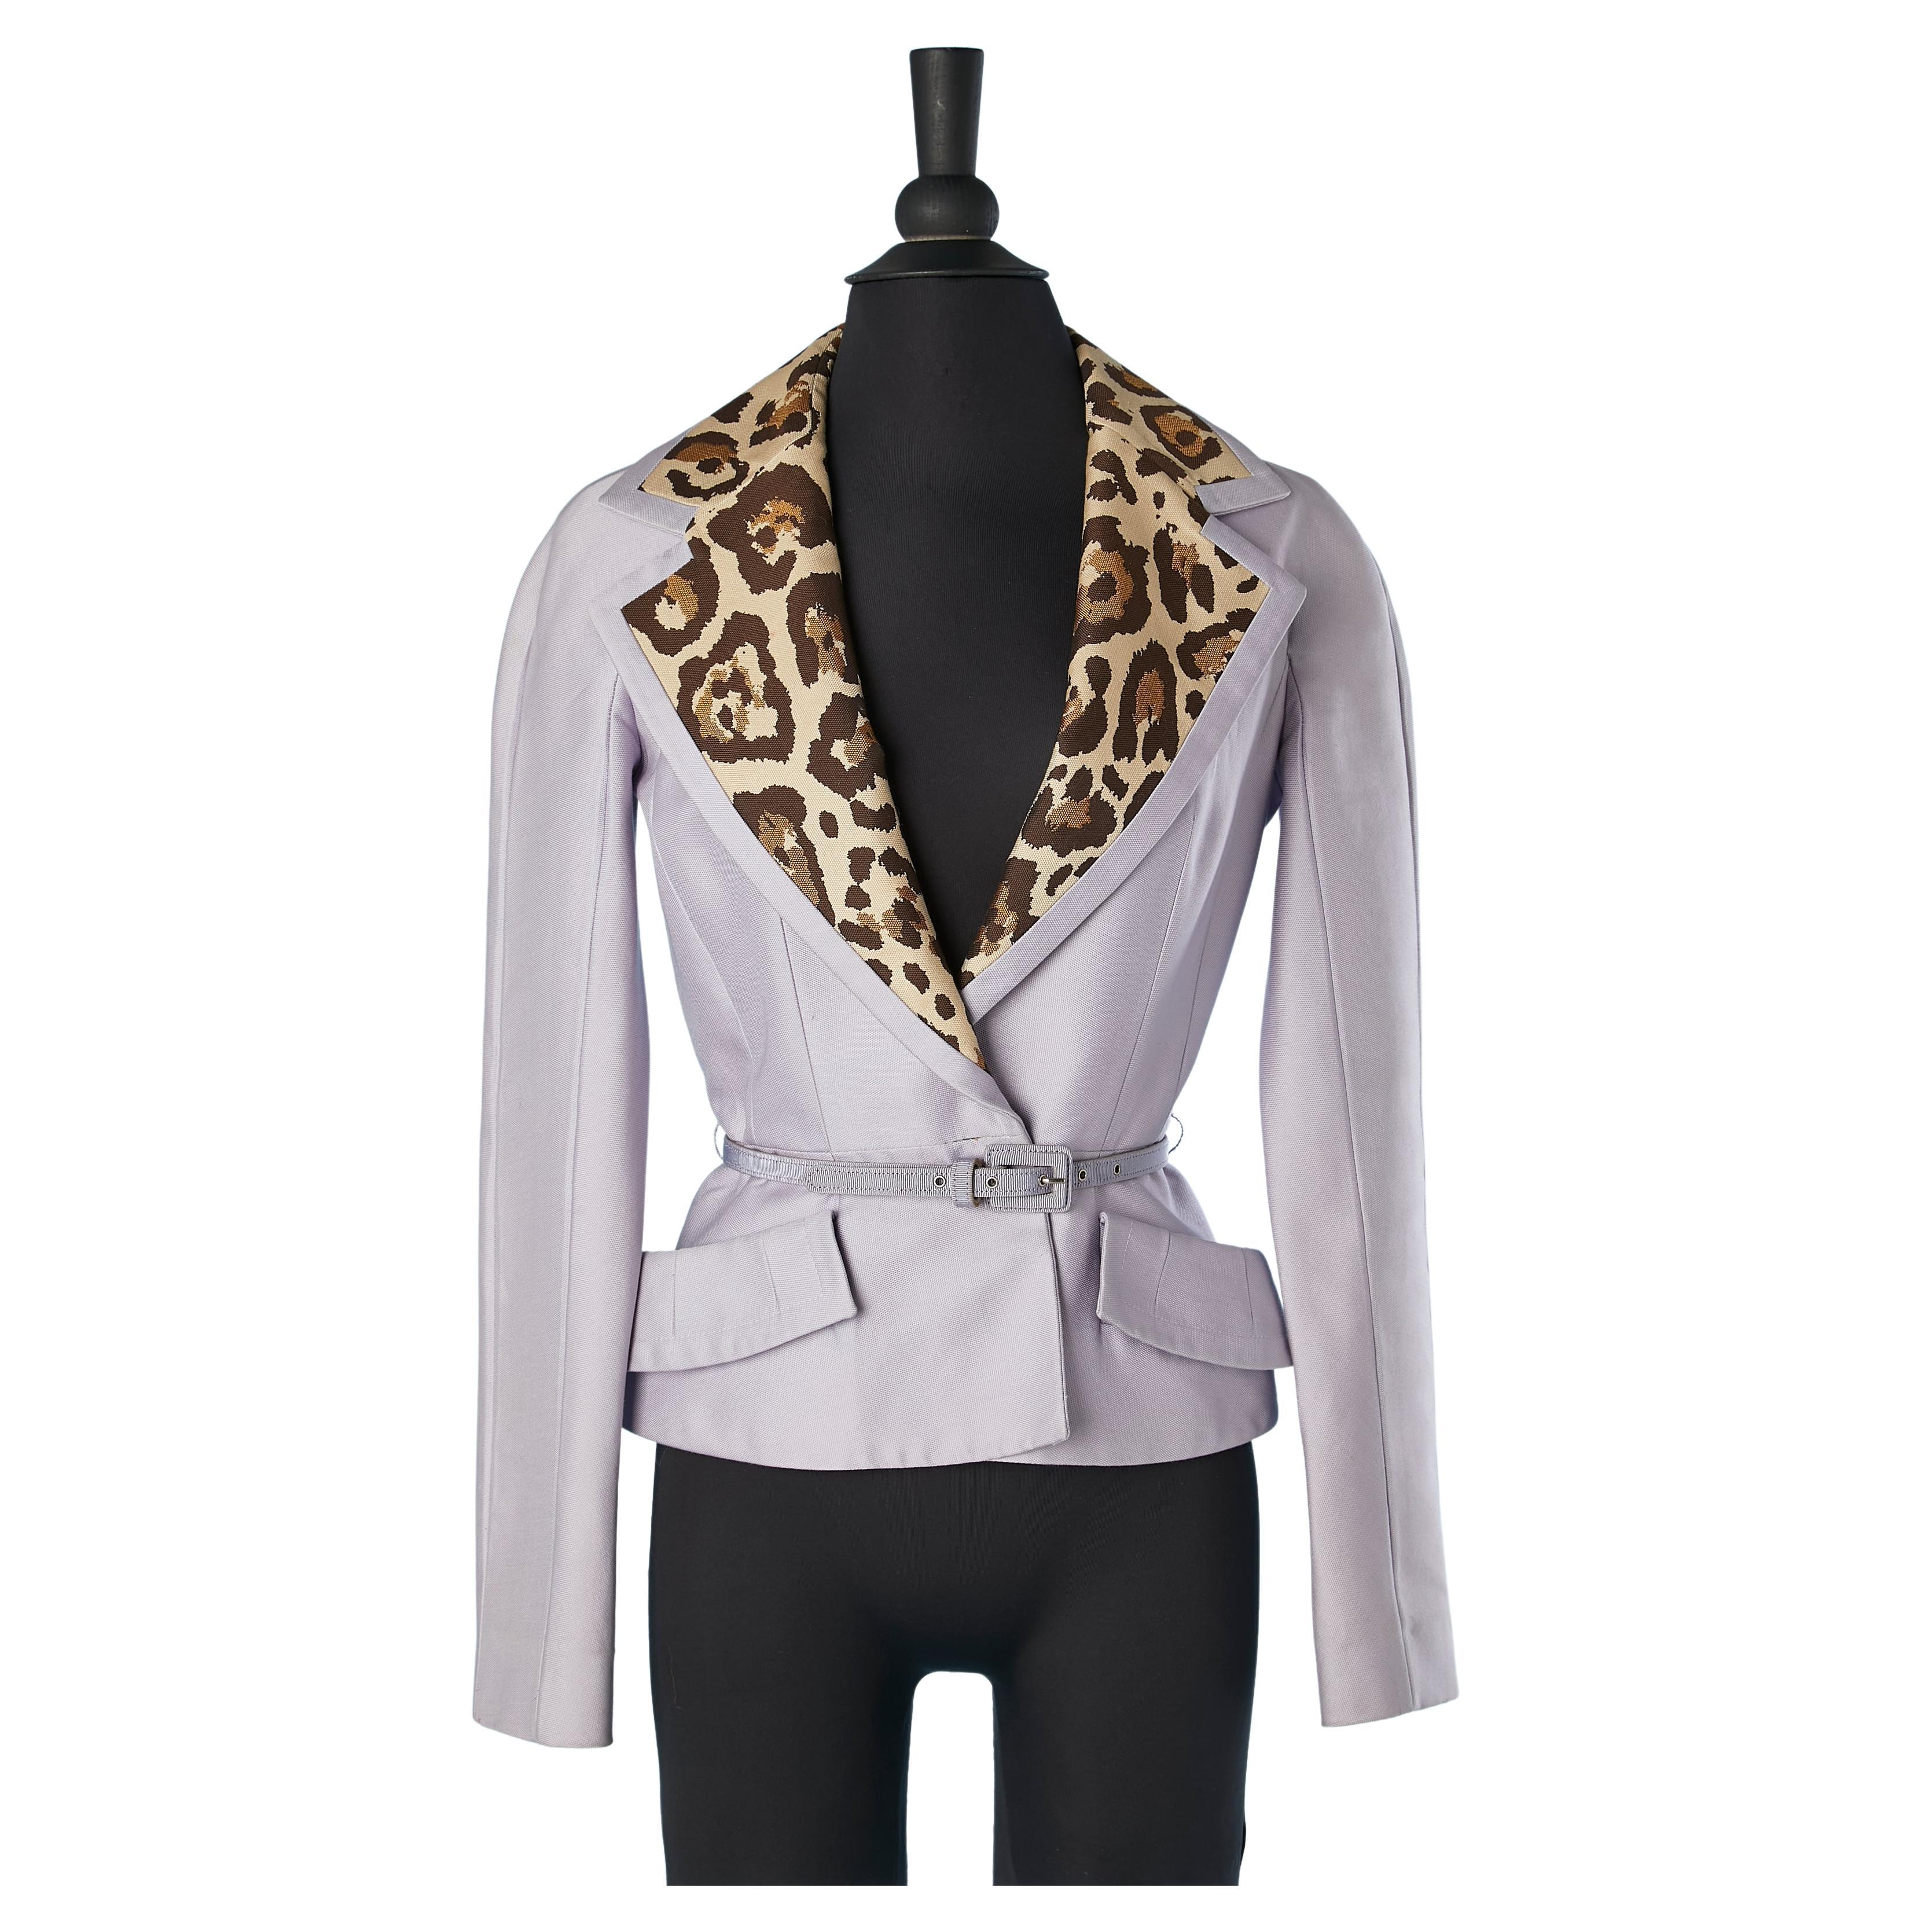 Lilak jacket with leopard jacquard collar Christian Dior by John Galliano Resort